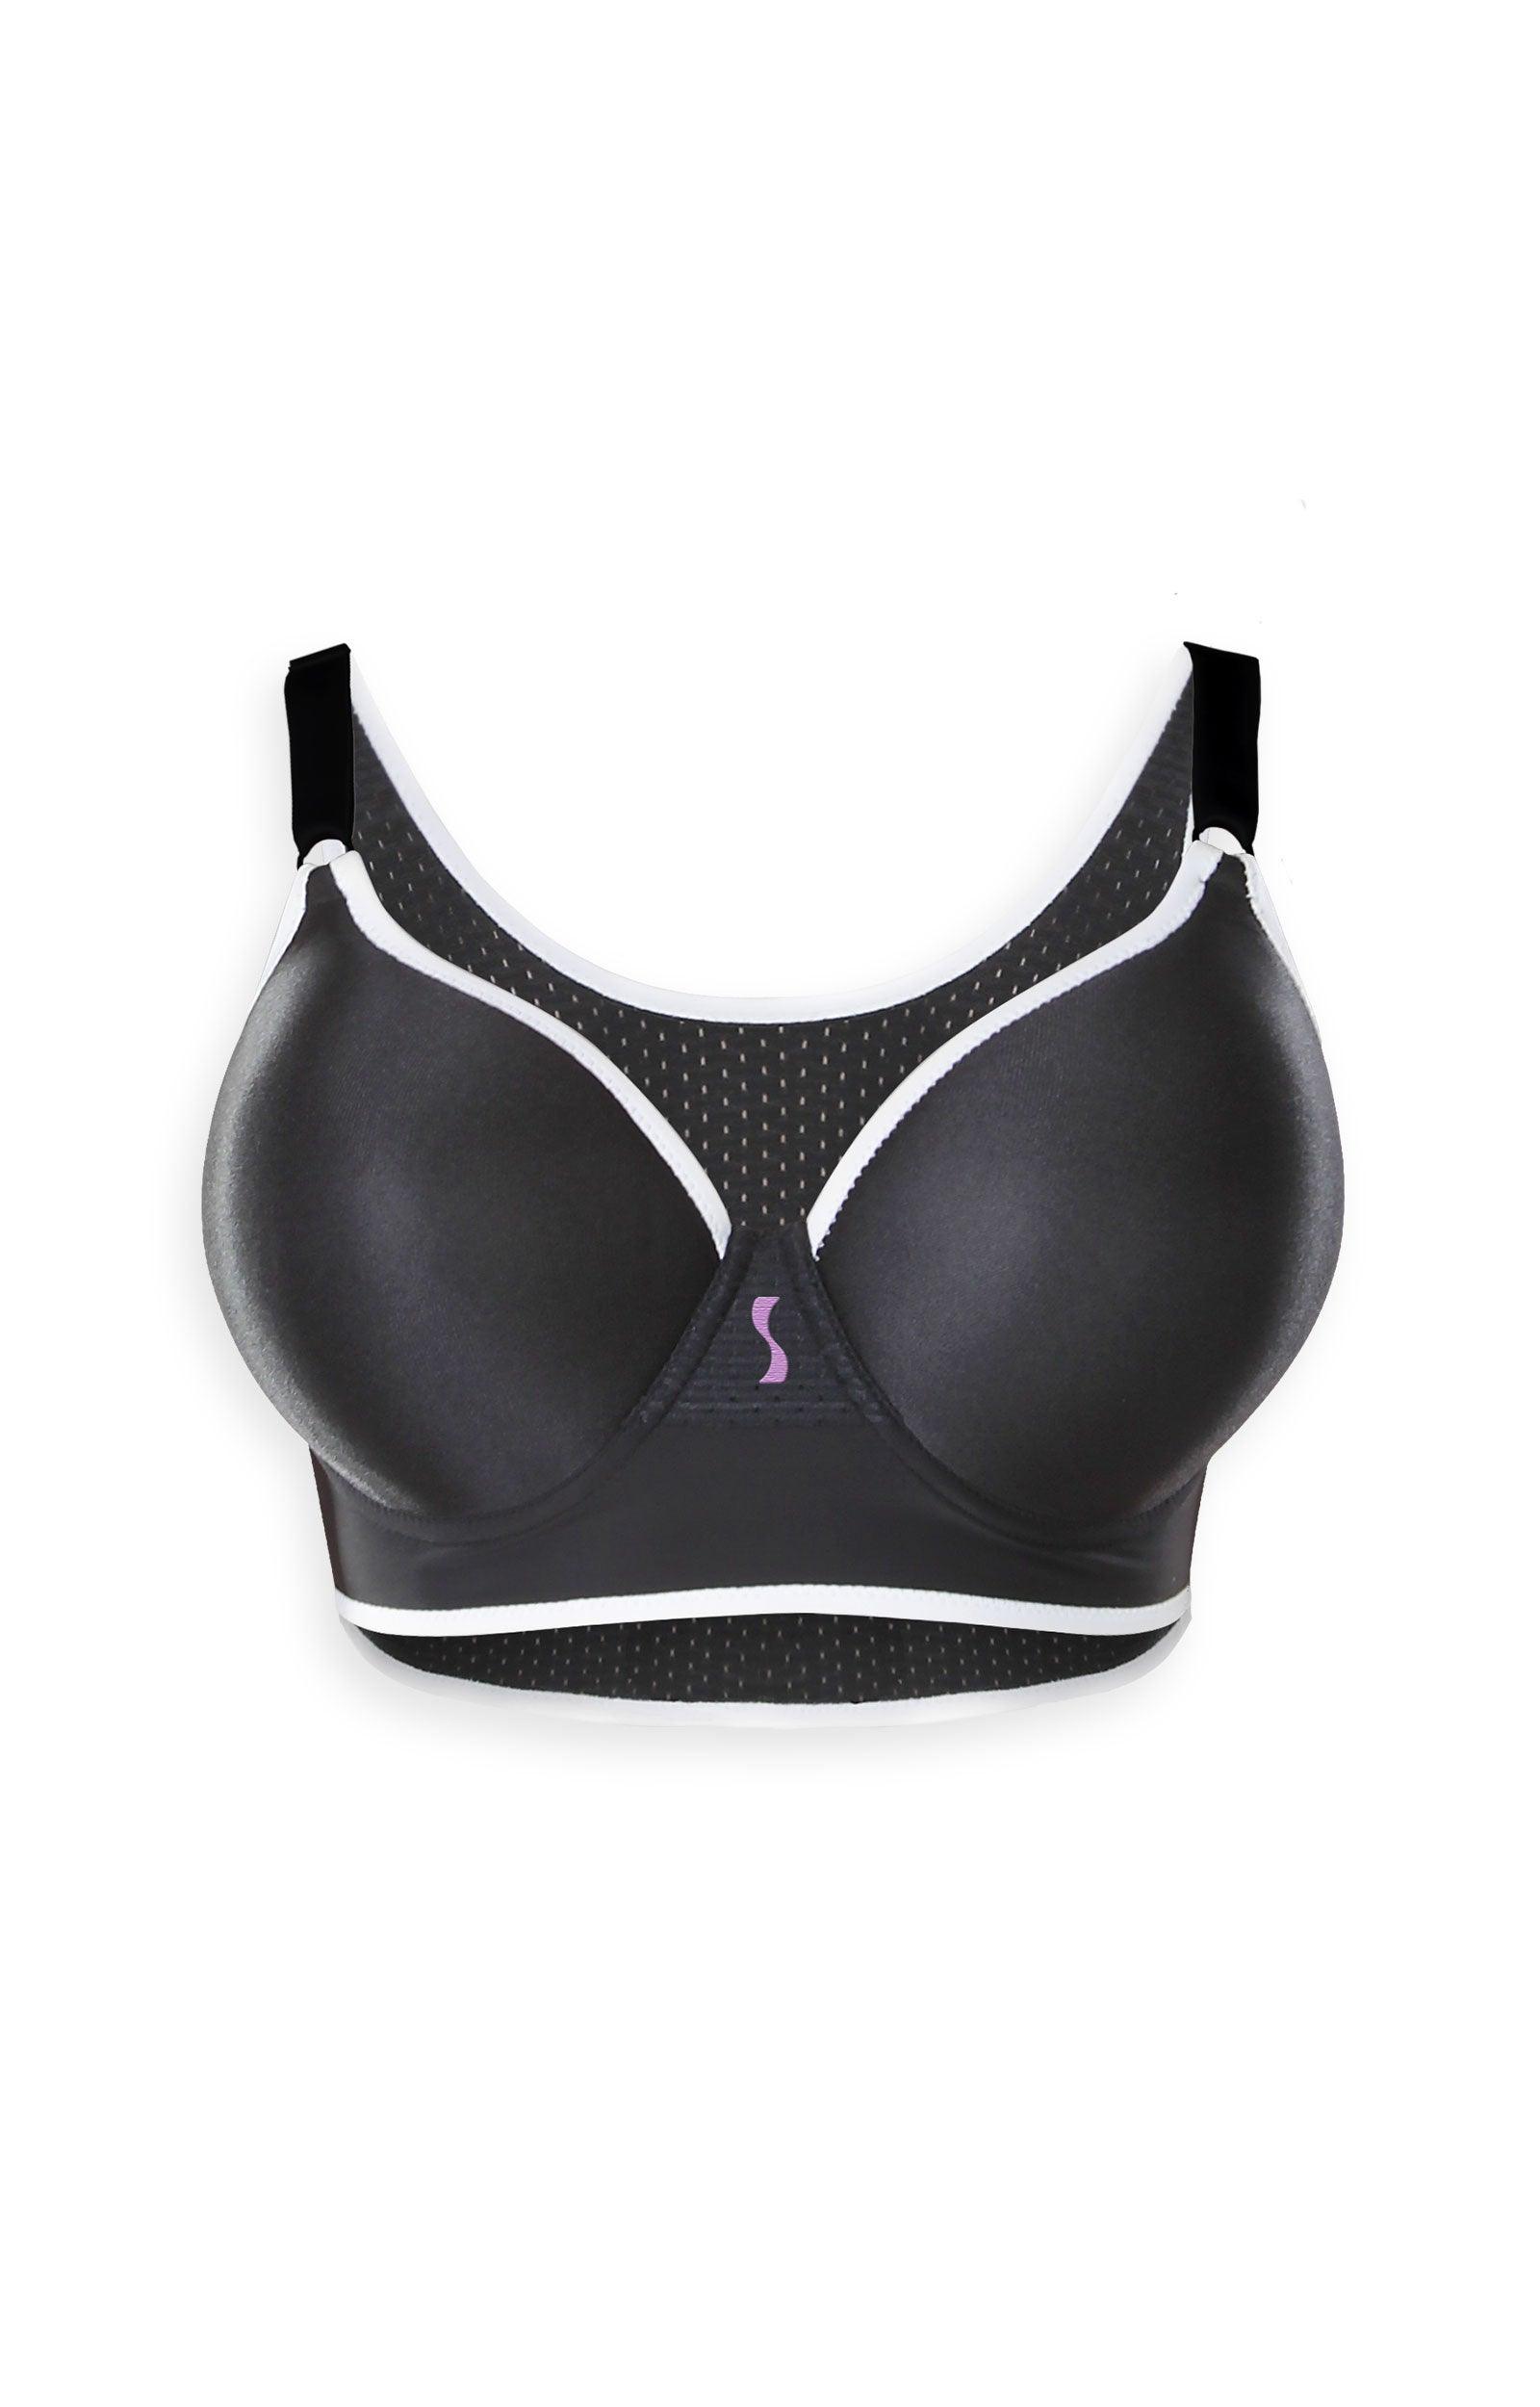 Stylo Fashions Sports Bra, sports bras for women, sports bra with padding, sports  bra cute, sports